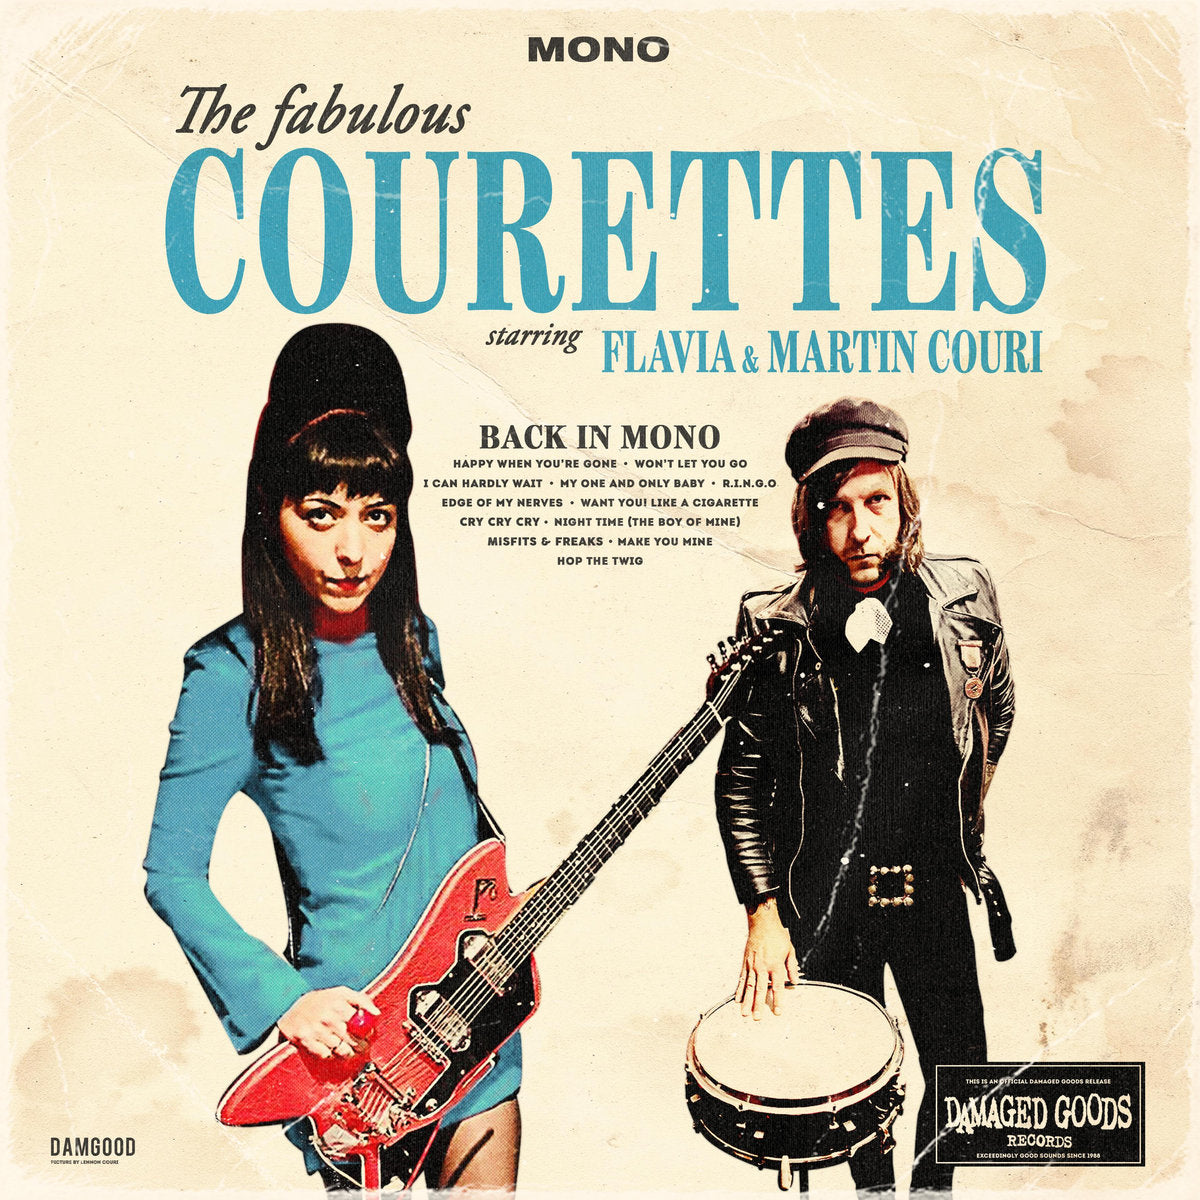 The Courettes "Back in Mono" LP